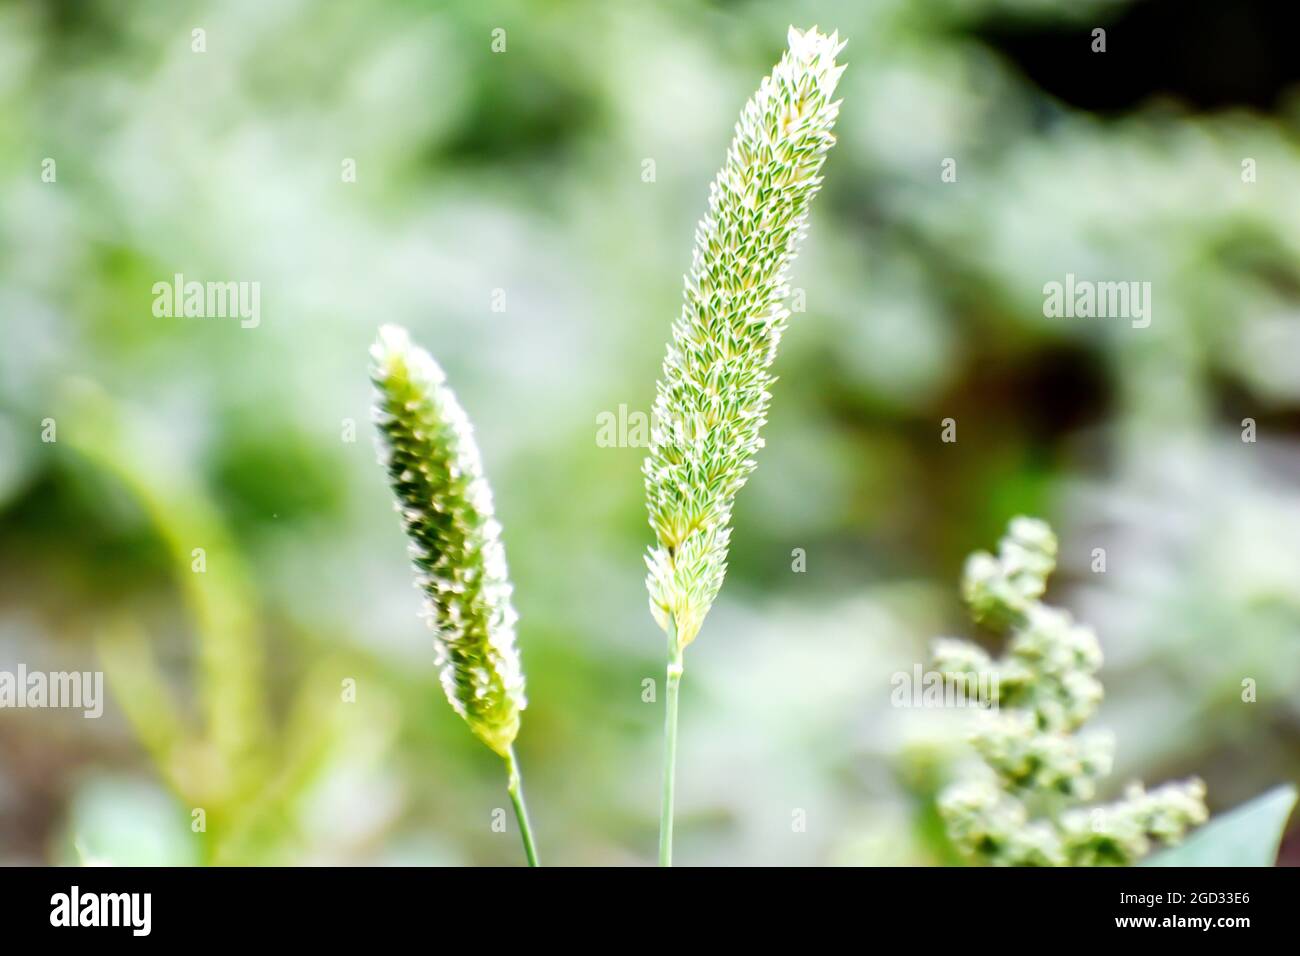 Selective focus shot of Alopecurus Arundinaceus on a green background Stock Photo